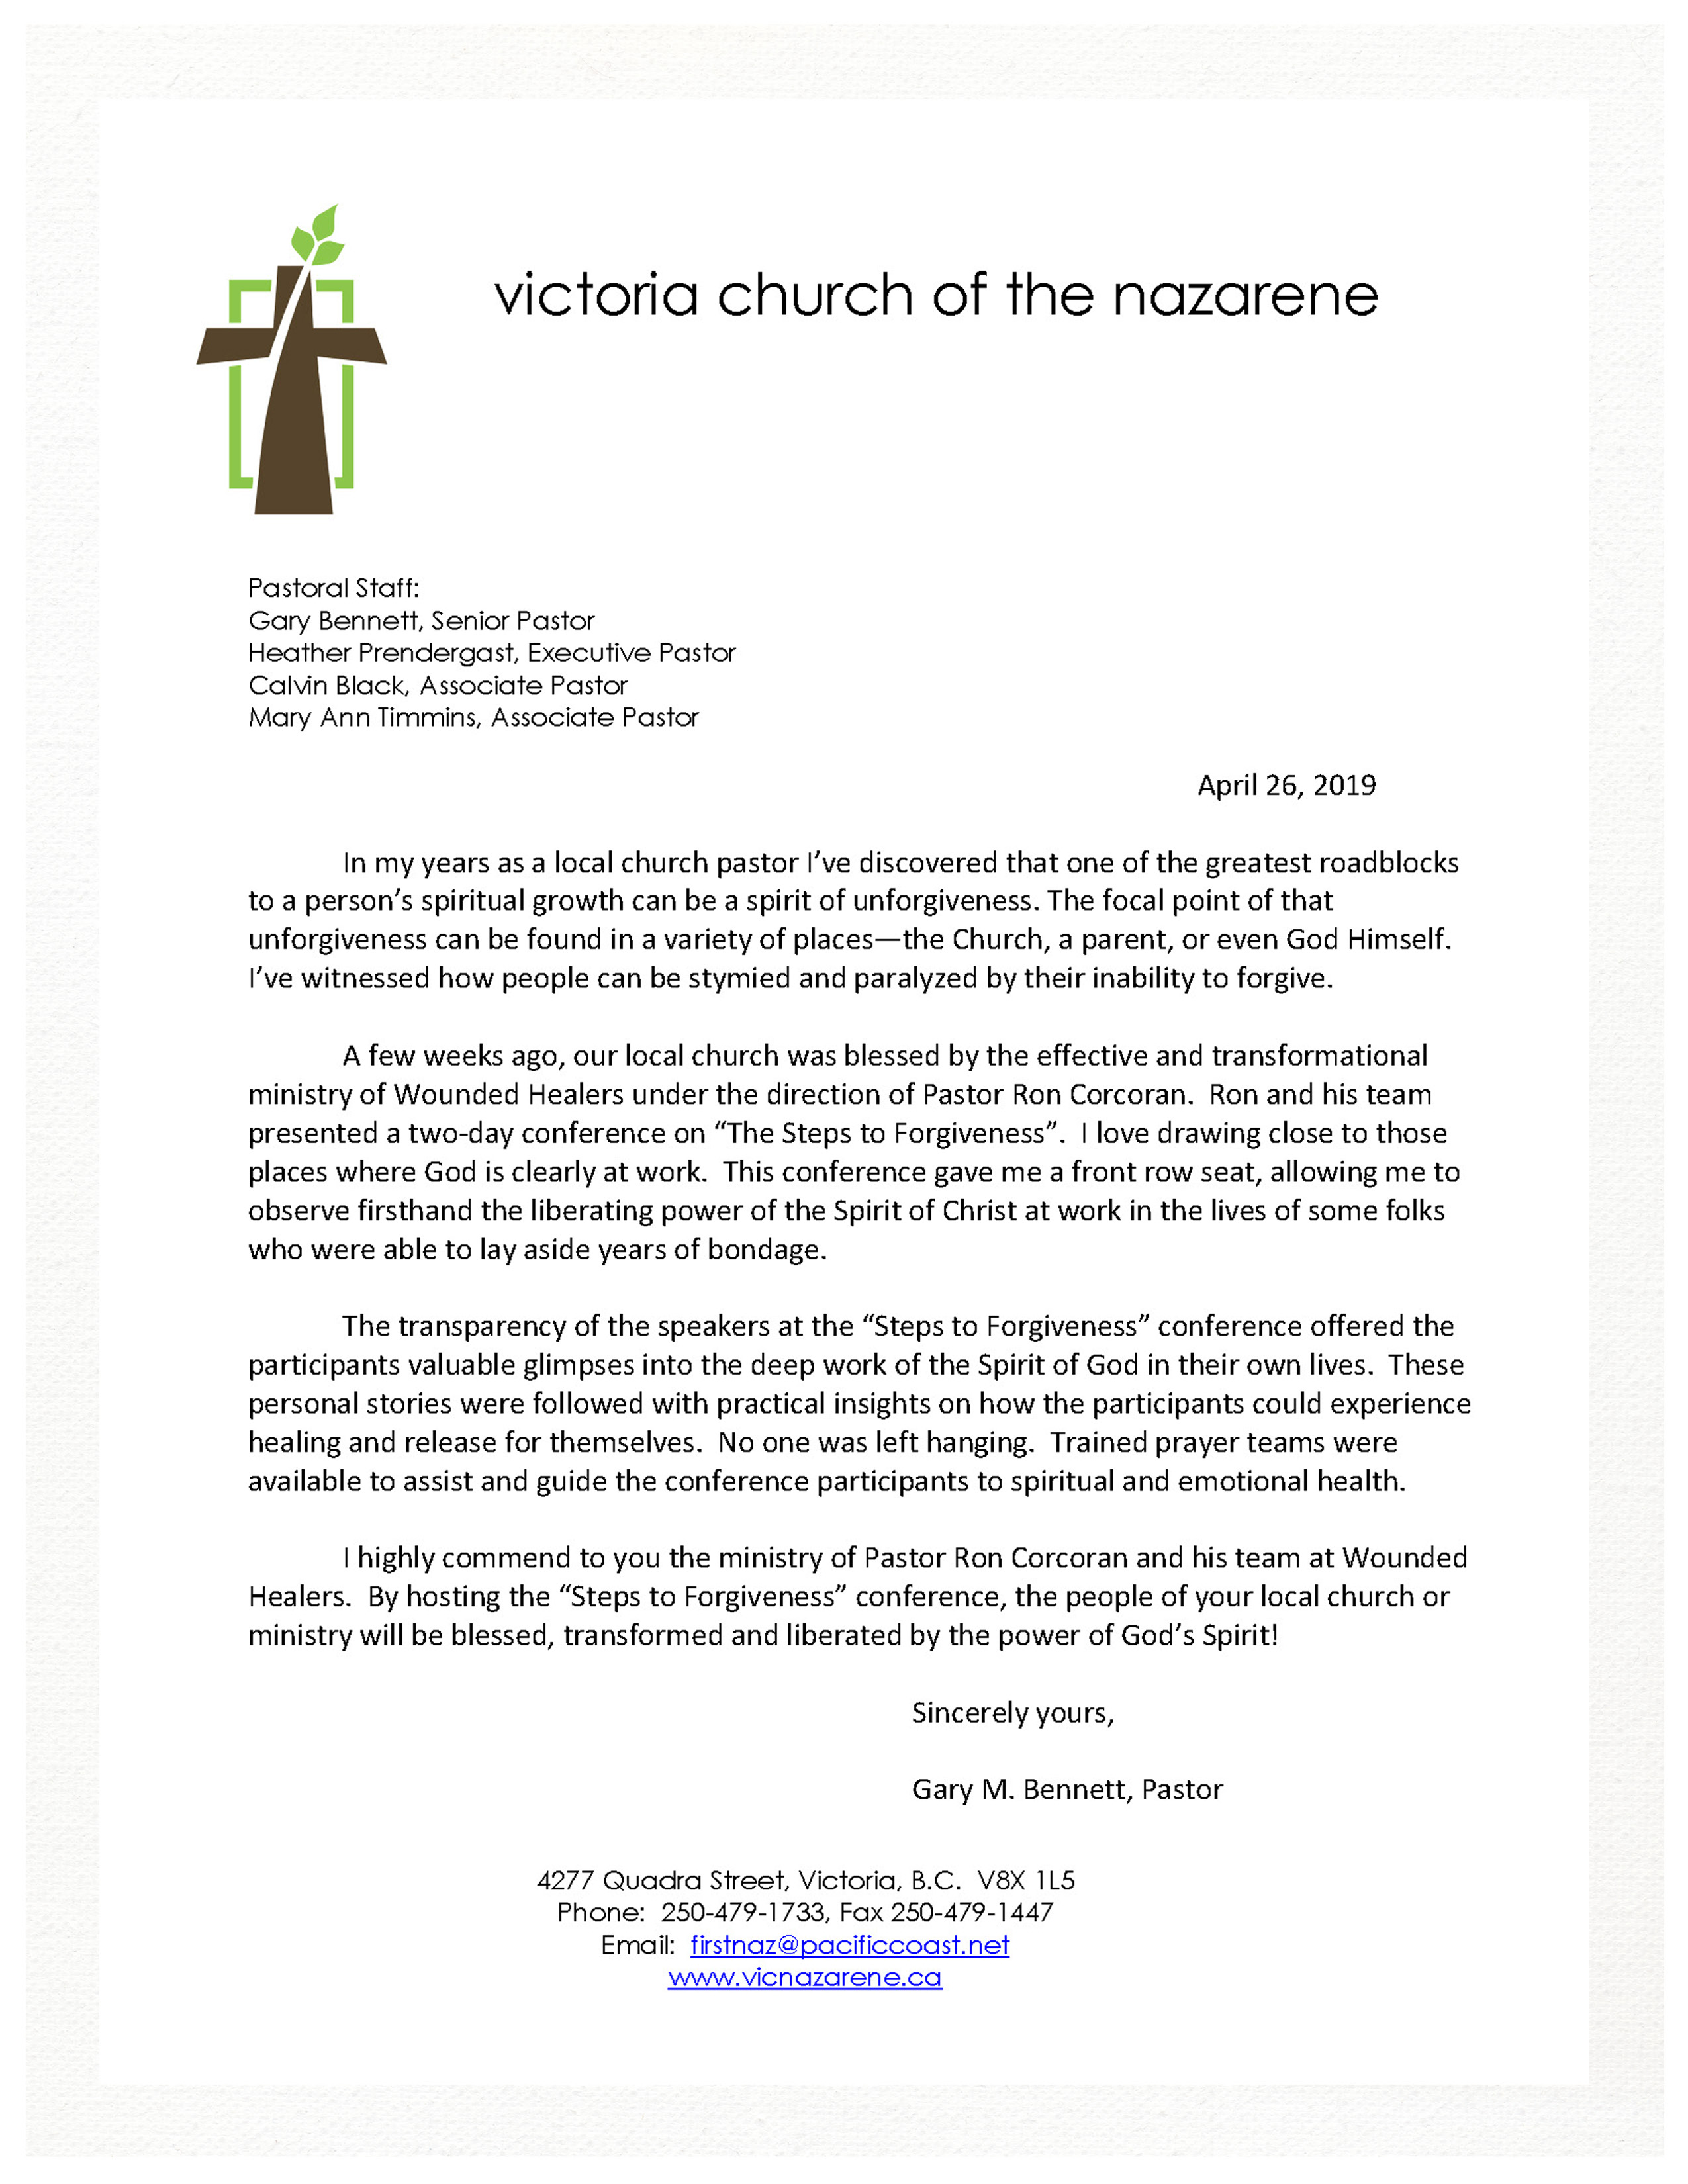 Endorsement from Church of the Nazarene